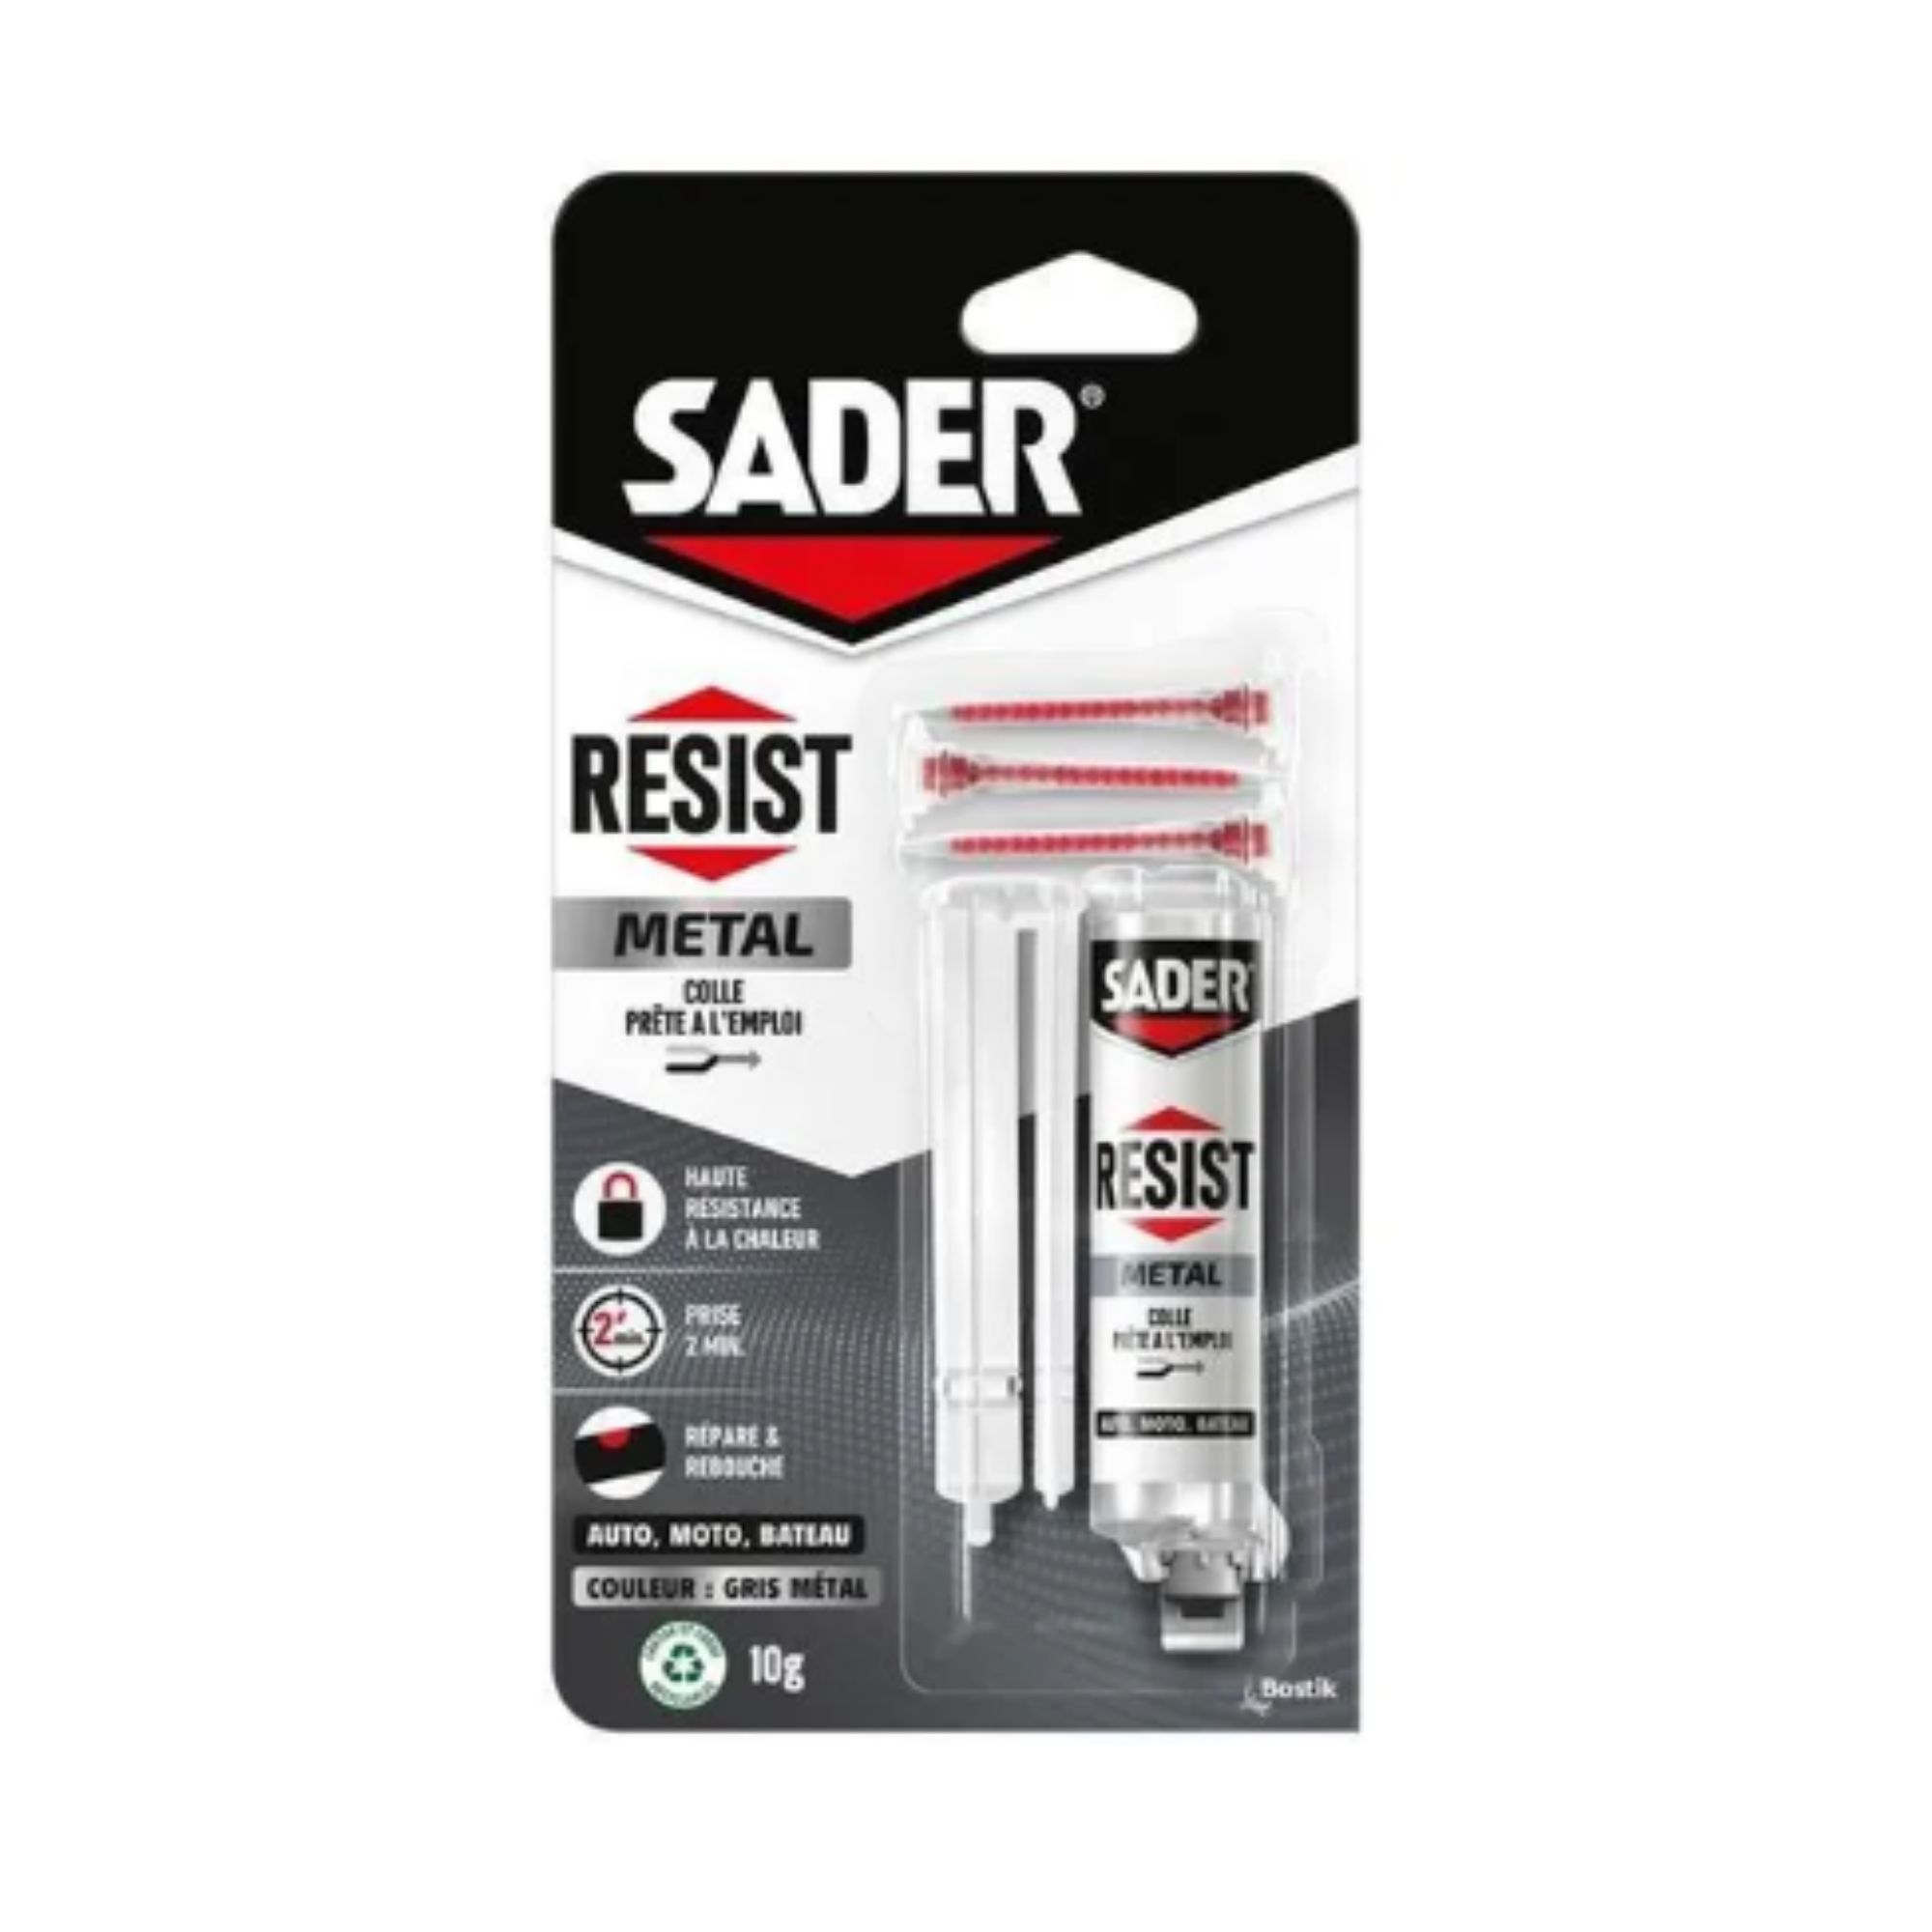 Sader resist metal 10gr Bostik